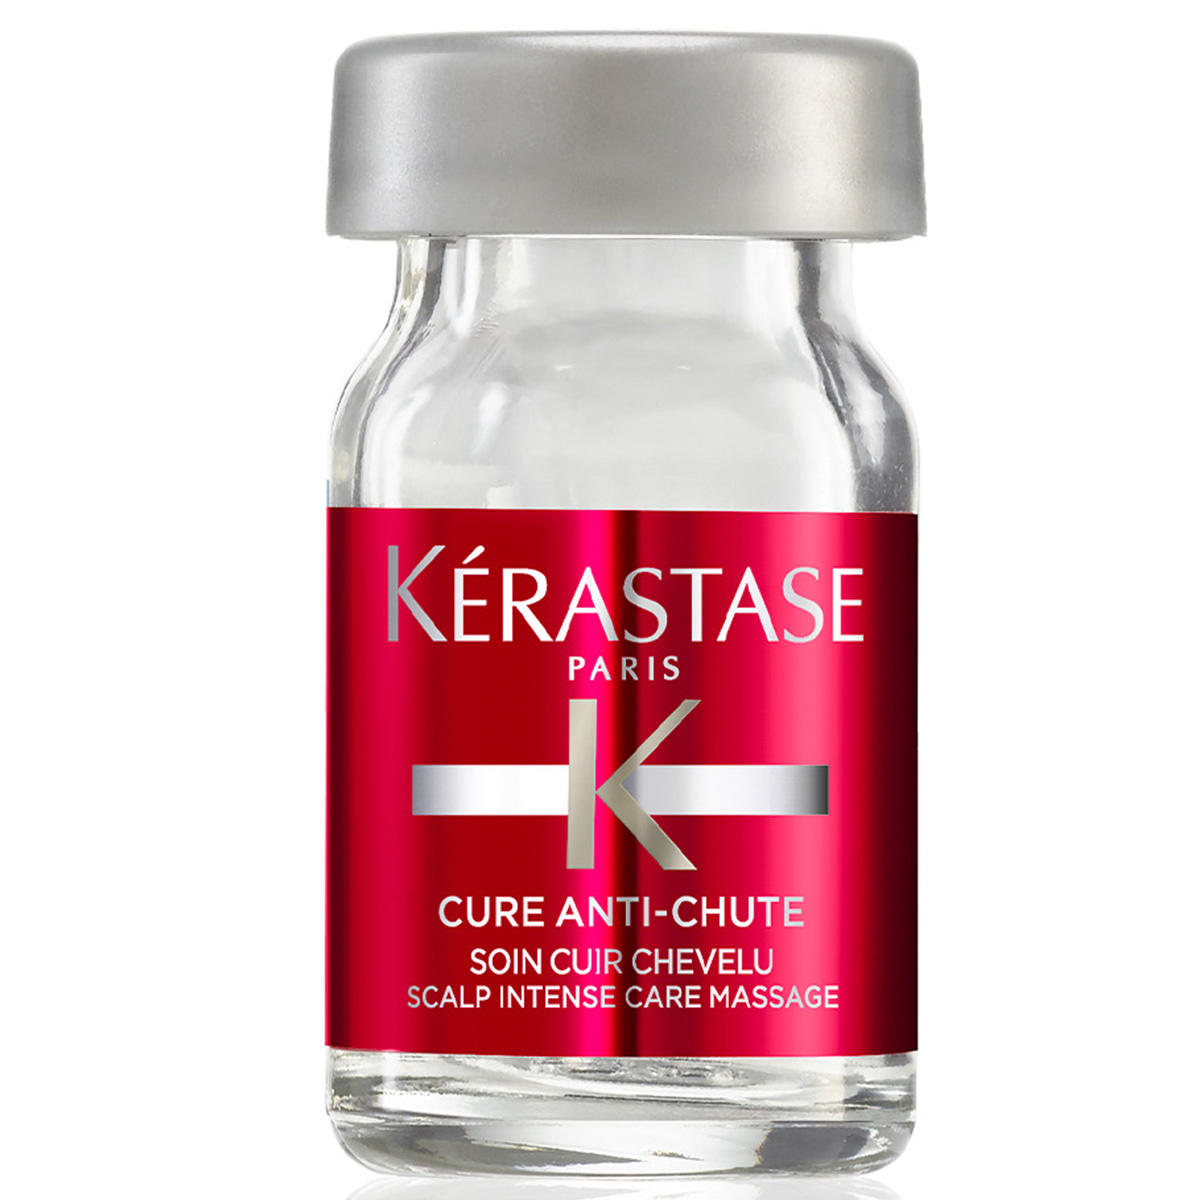 Kérastase Spécifique Cure Anti-Chute Package with 10 x 6 ml - 1